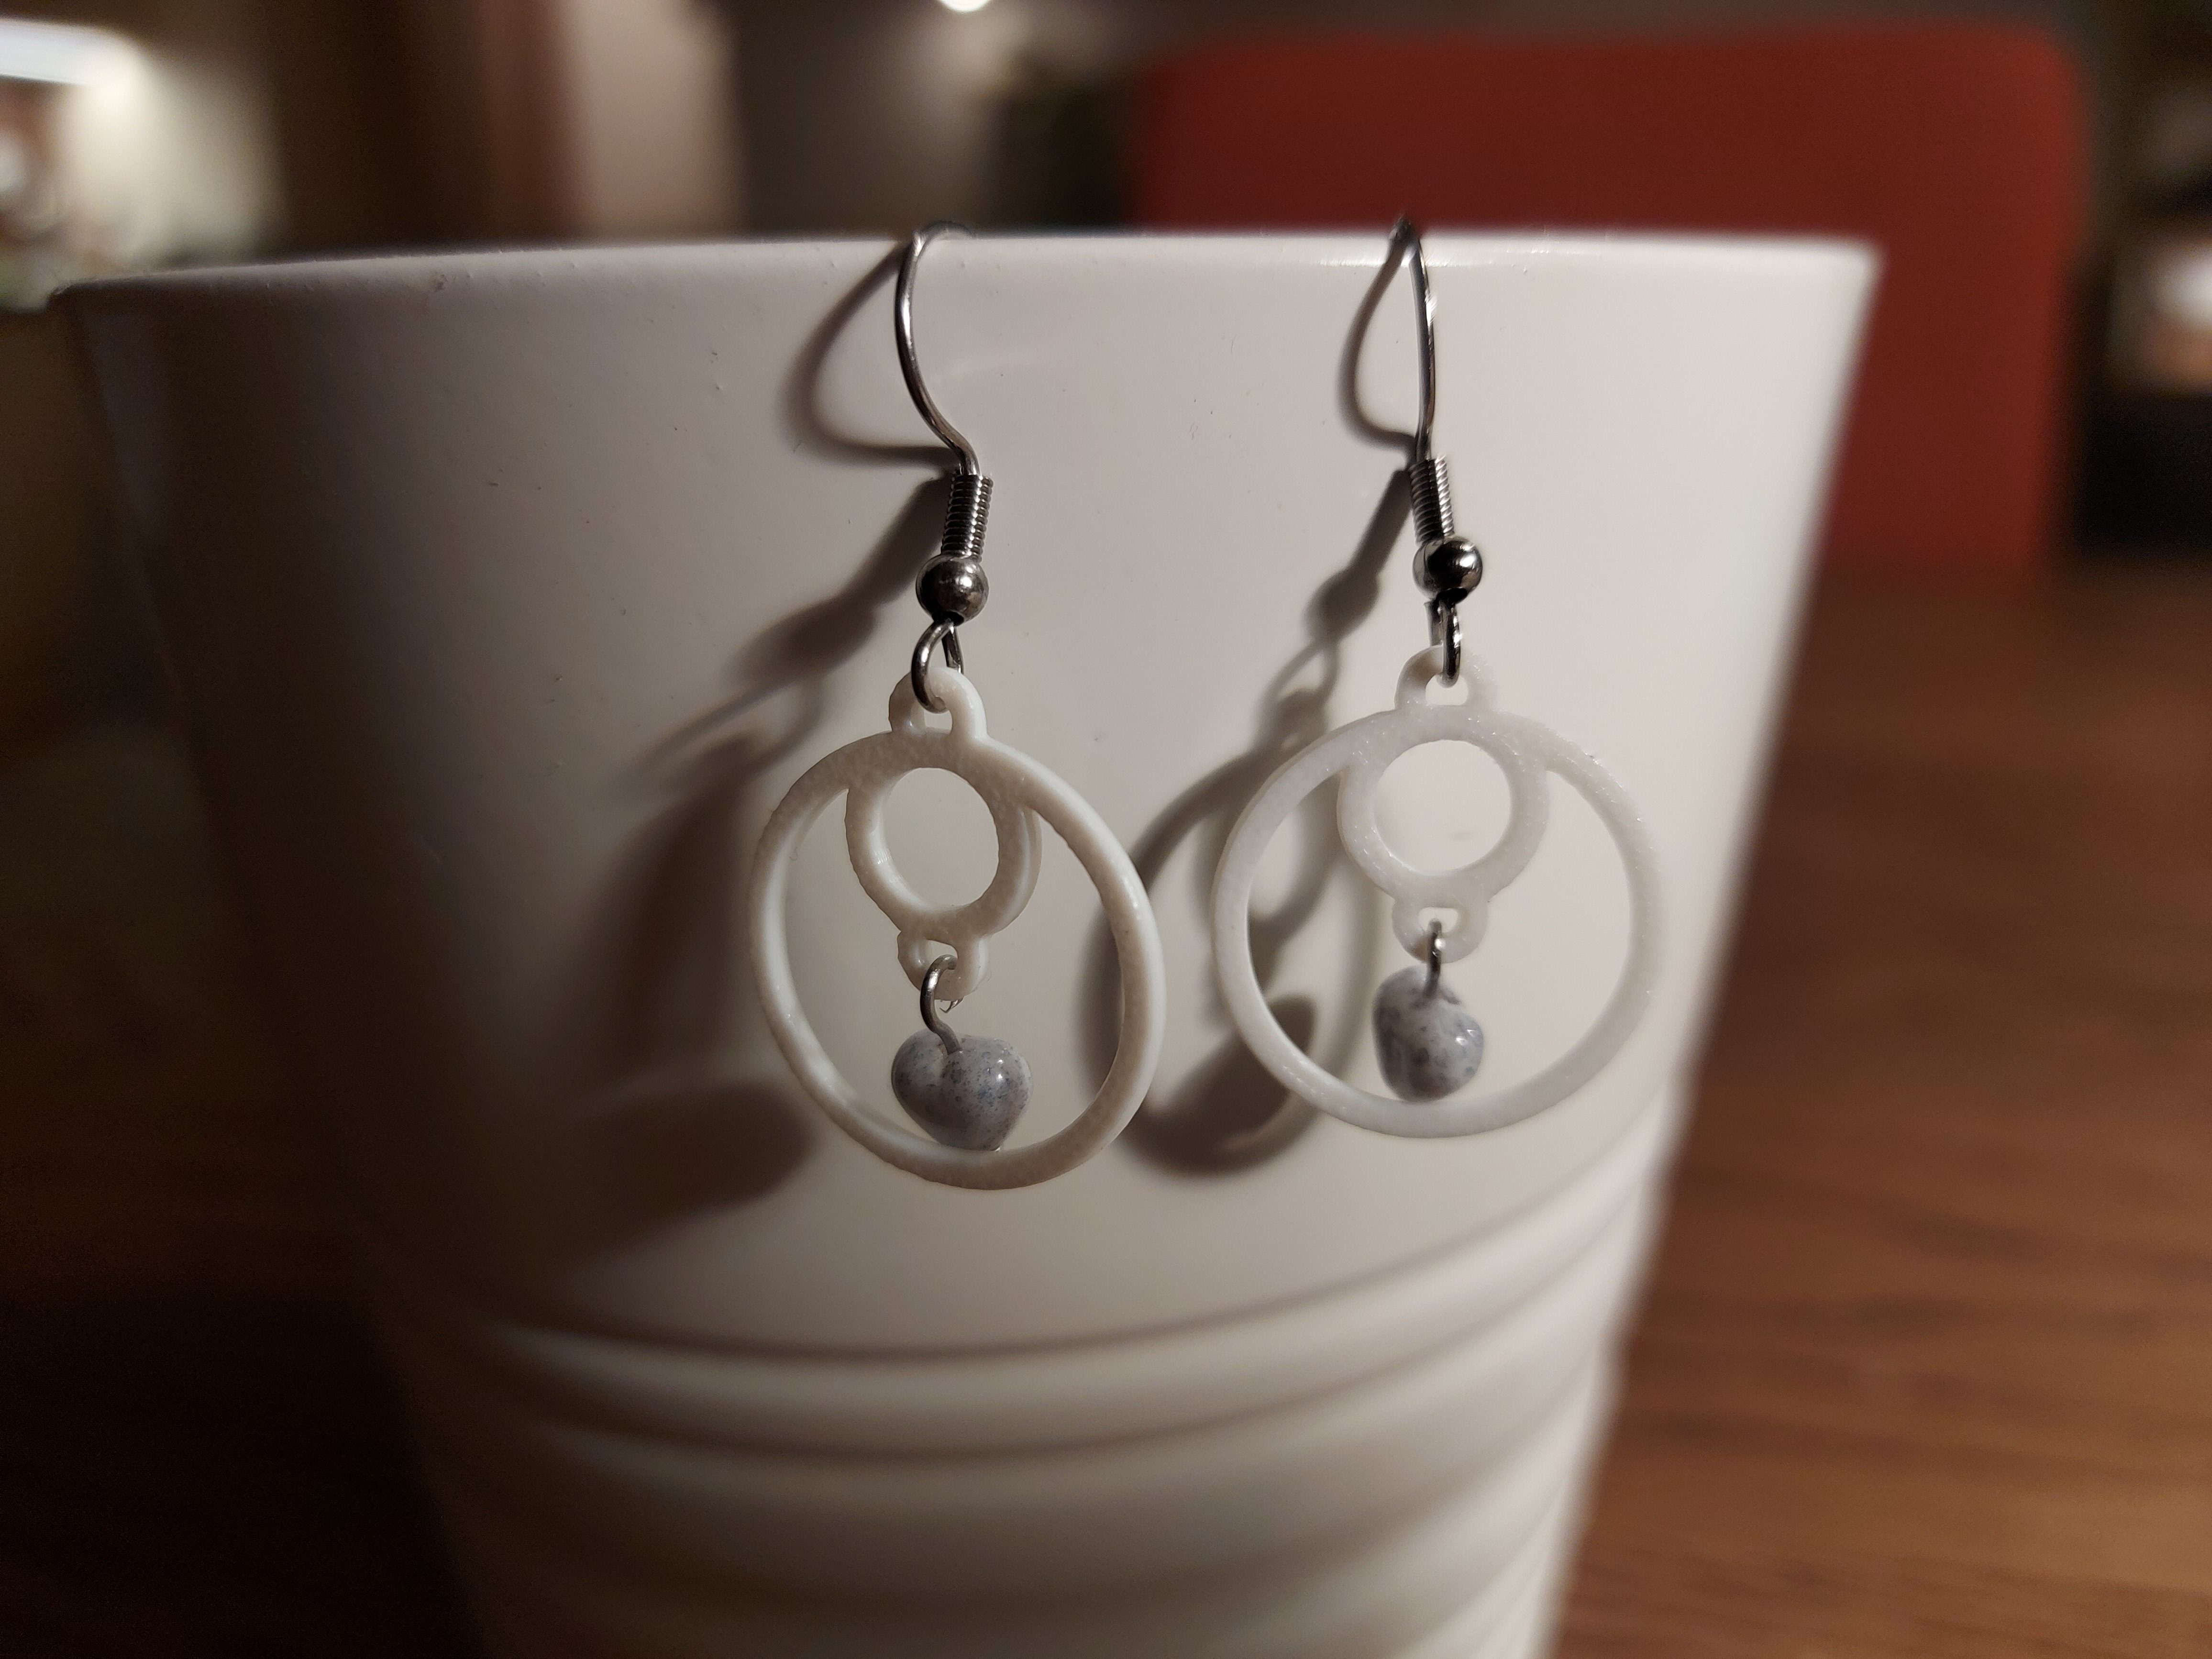 Circular earrings with beads